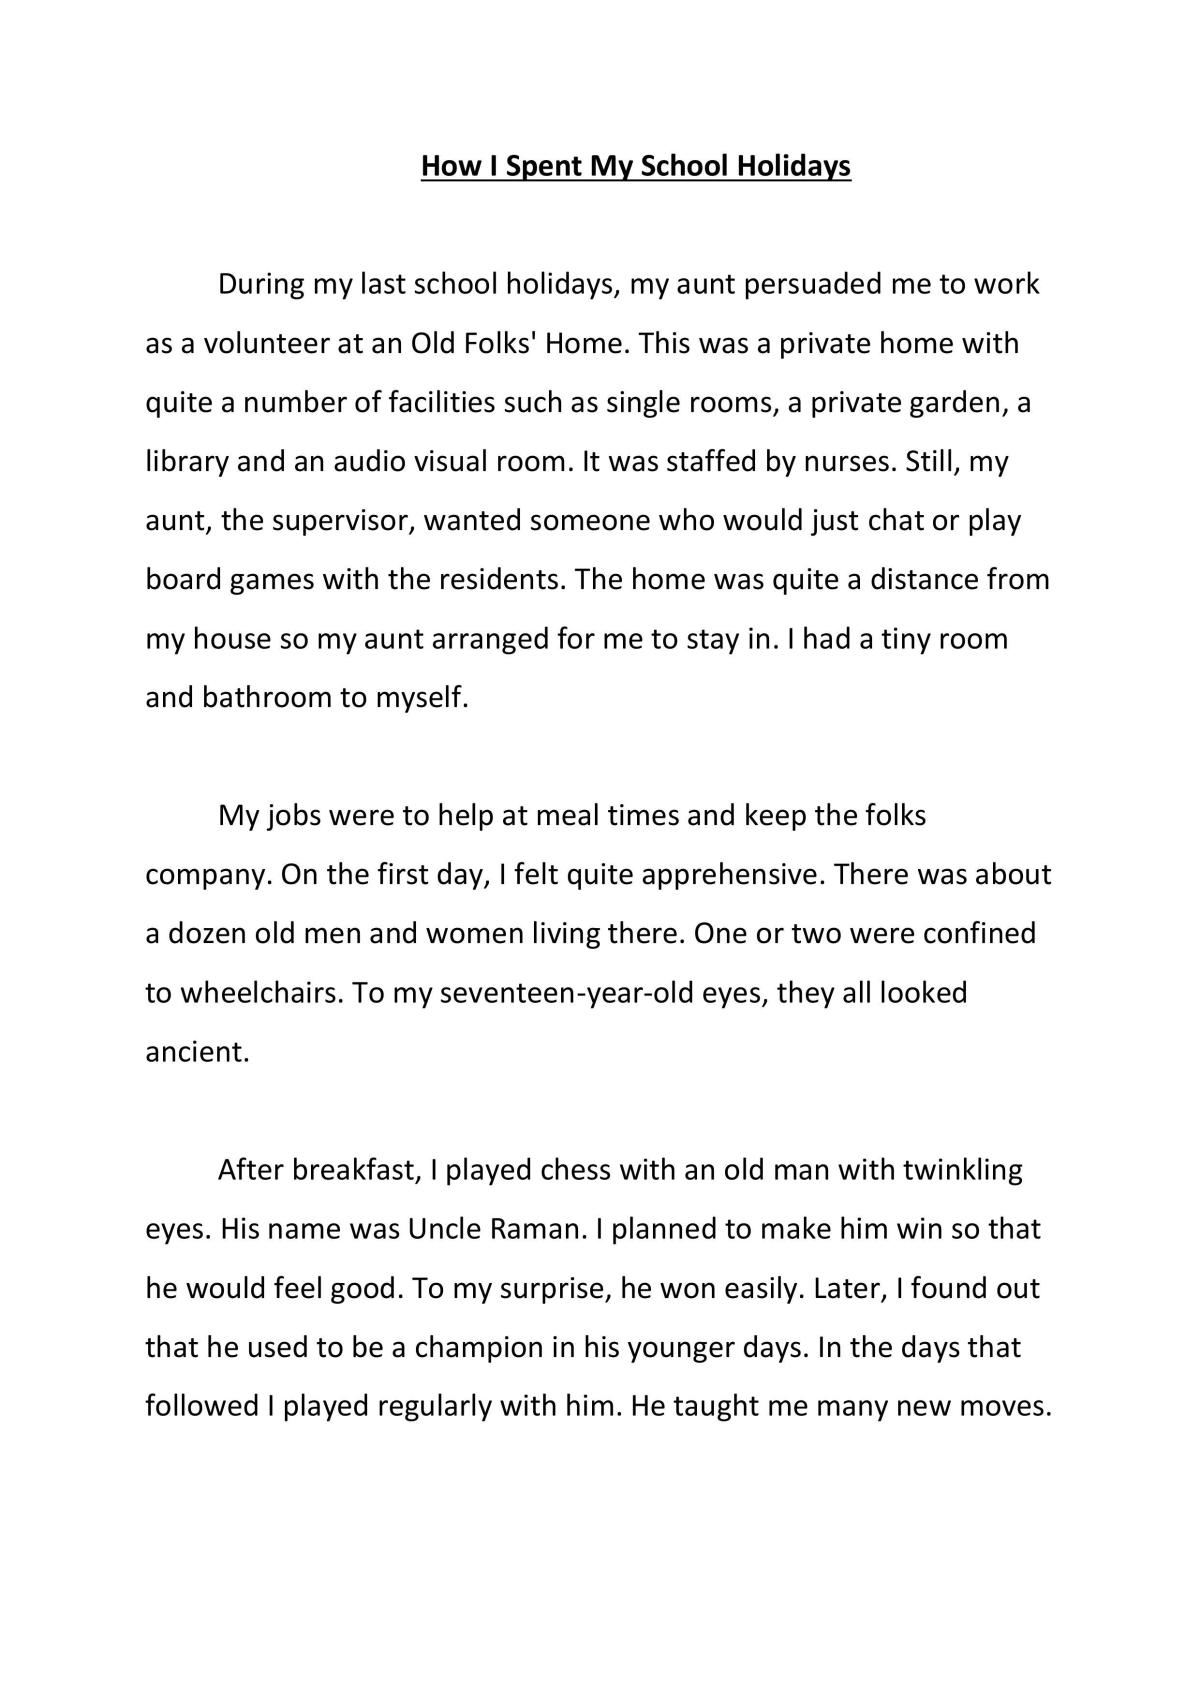 my dream holiday essay spm